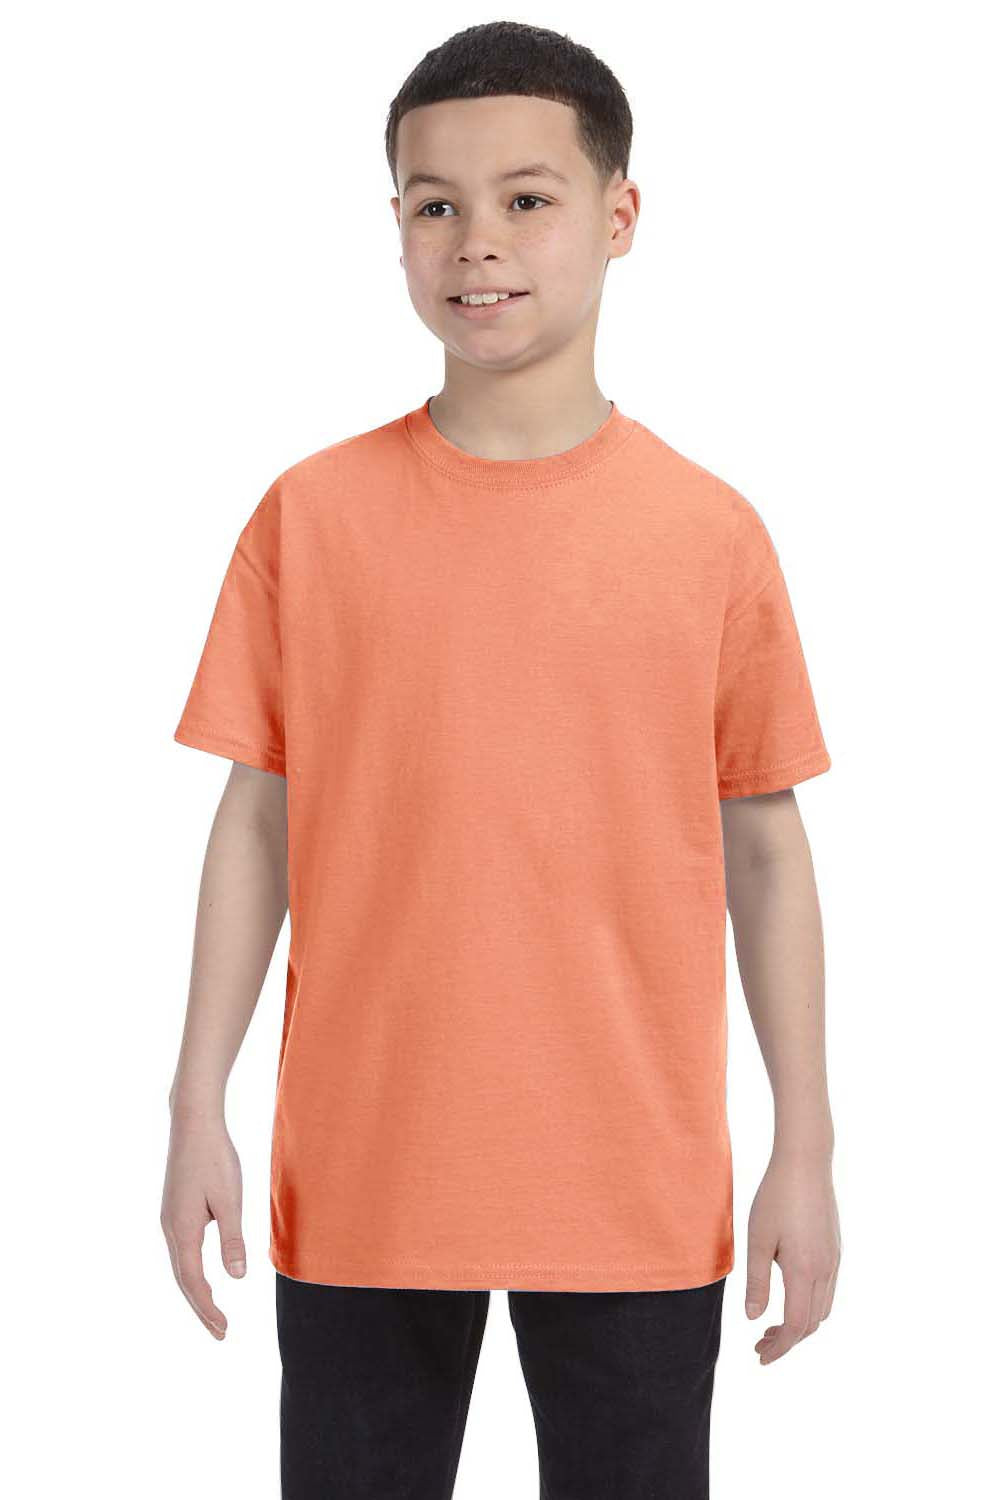 Hanes 54500 Youth ComfortSoft Short Sleeve Crewneck T-Shirt Candy Orange Front